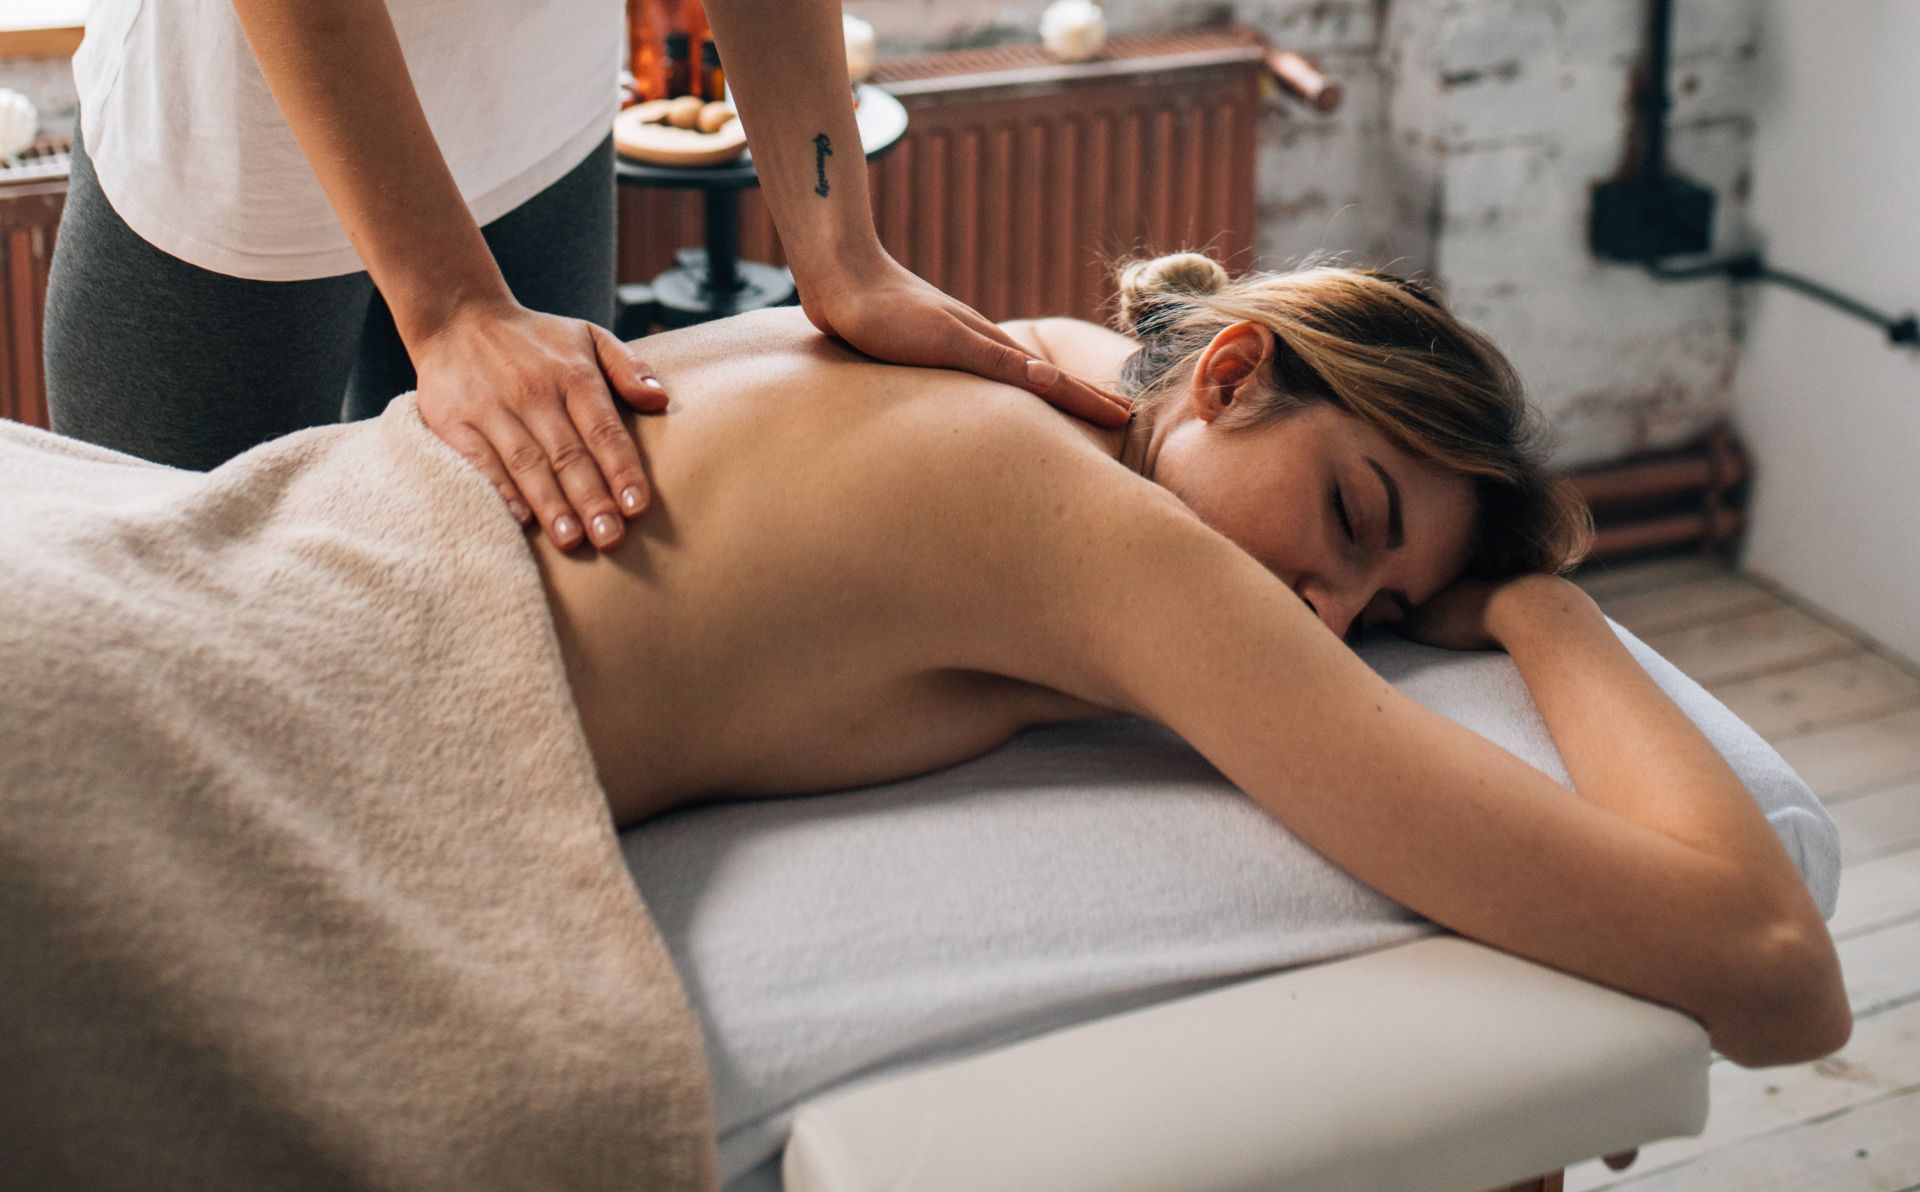 A Woman having a Massage